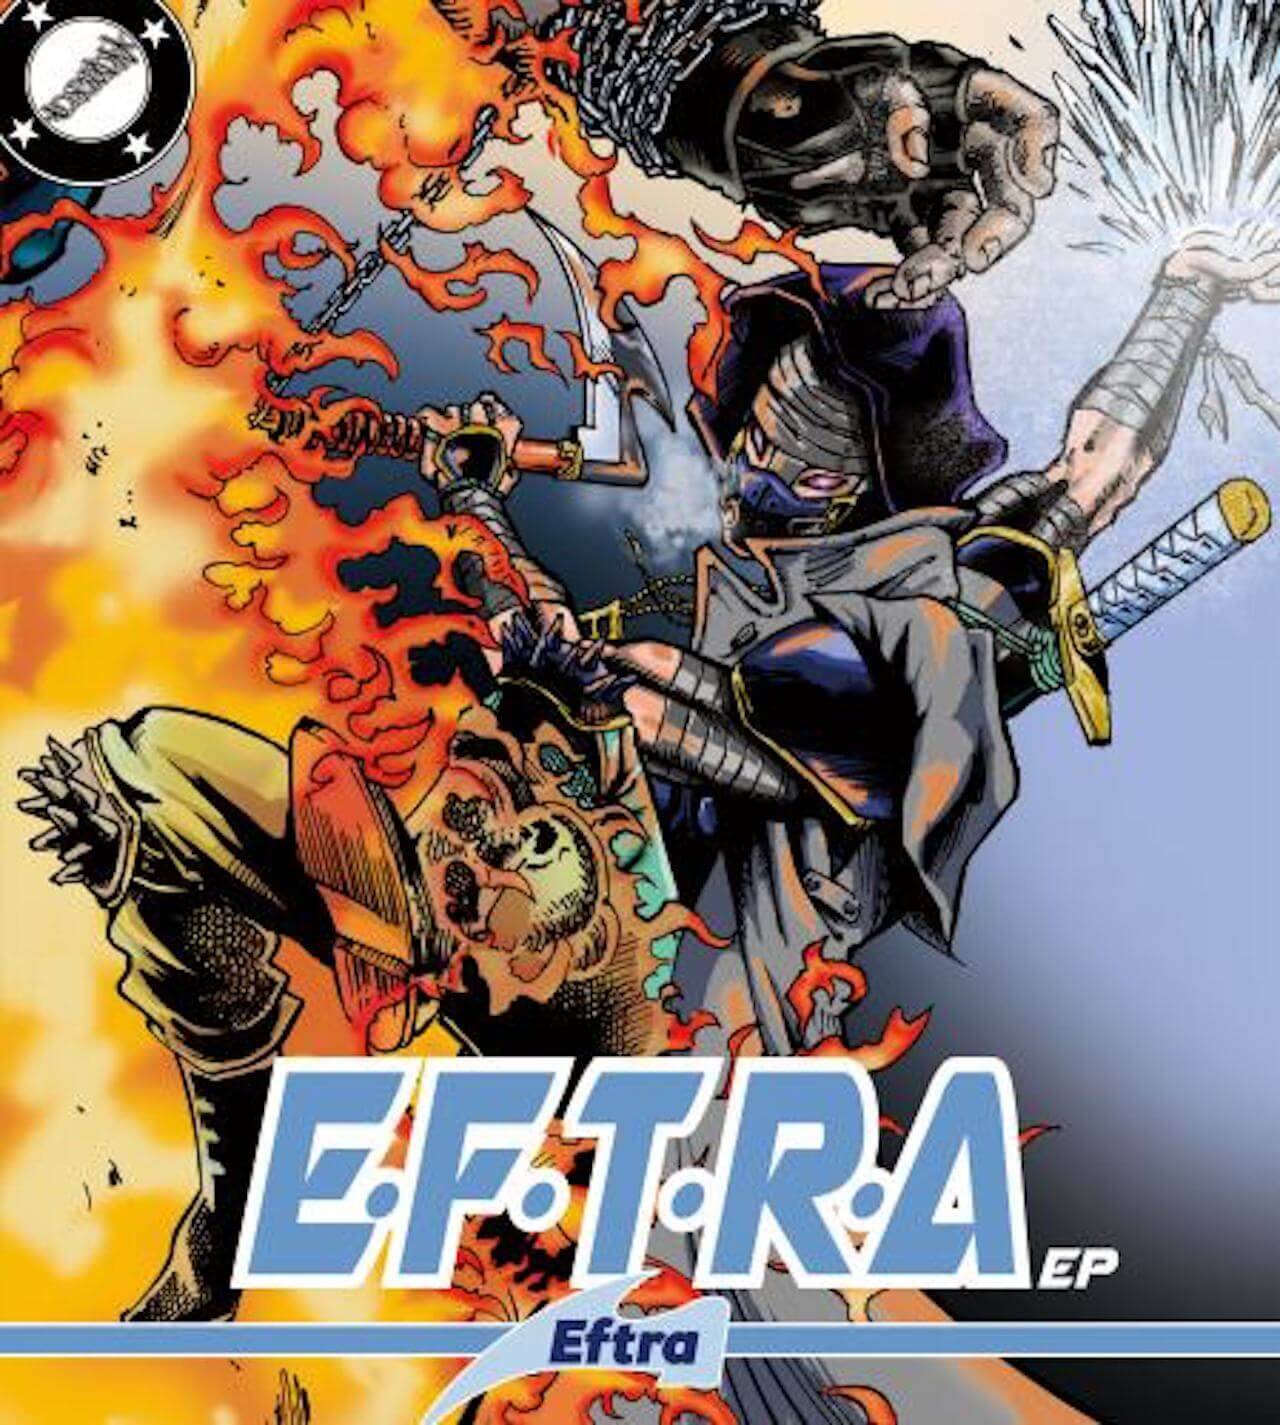 EftraのEP『E.F.T.R.A ep』がDIRTRAIN × WDsoundsからリリース｜MASS-HOLEが全曲プロデュース、客演にBOMB WALKERら